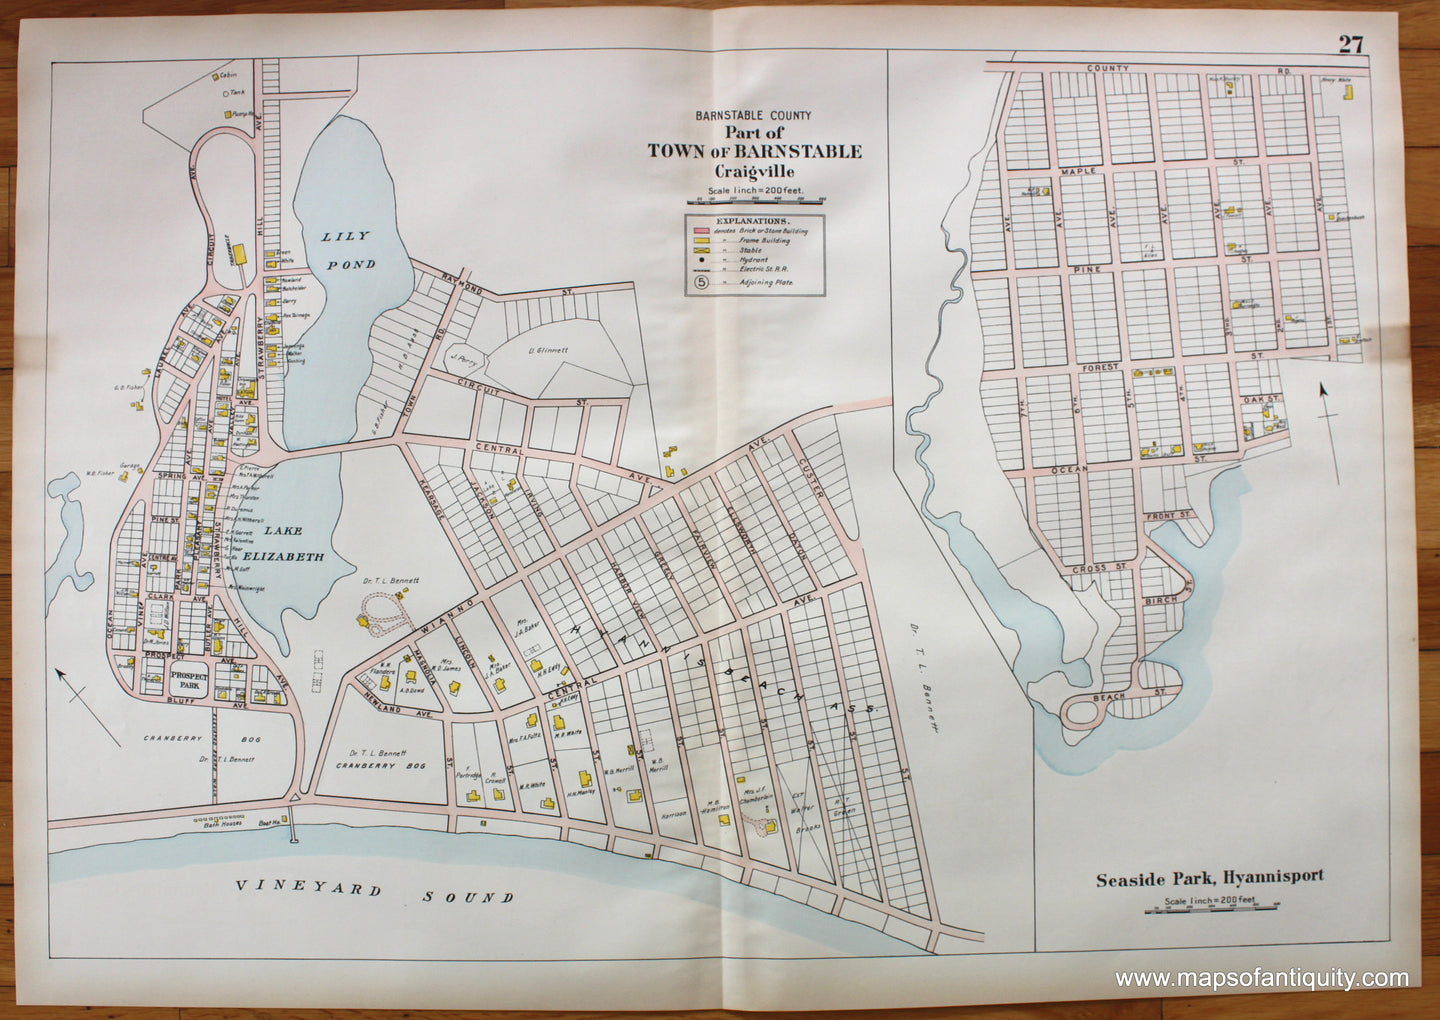 Antique-Map-Craigville-Seaside-Park-(Hyannisport)-Page-27